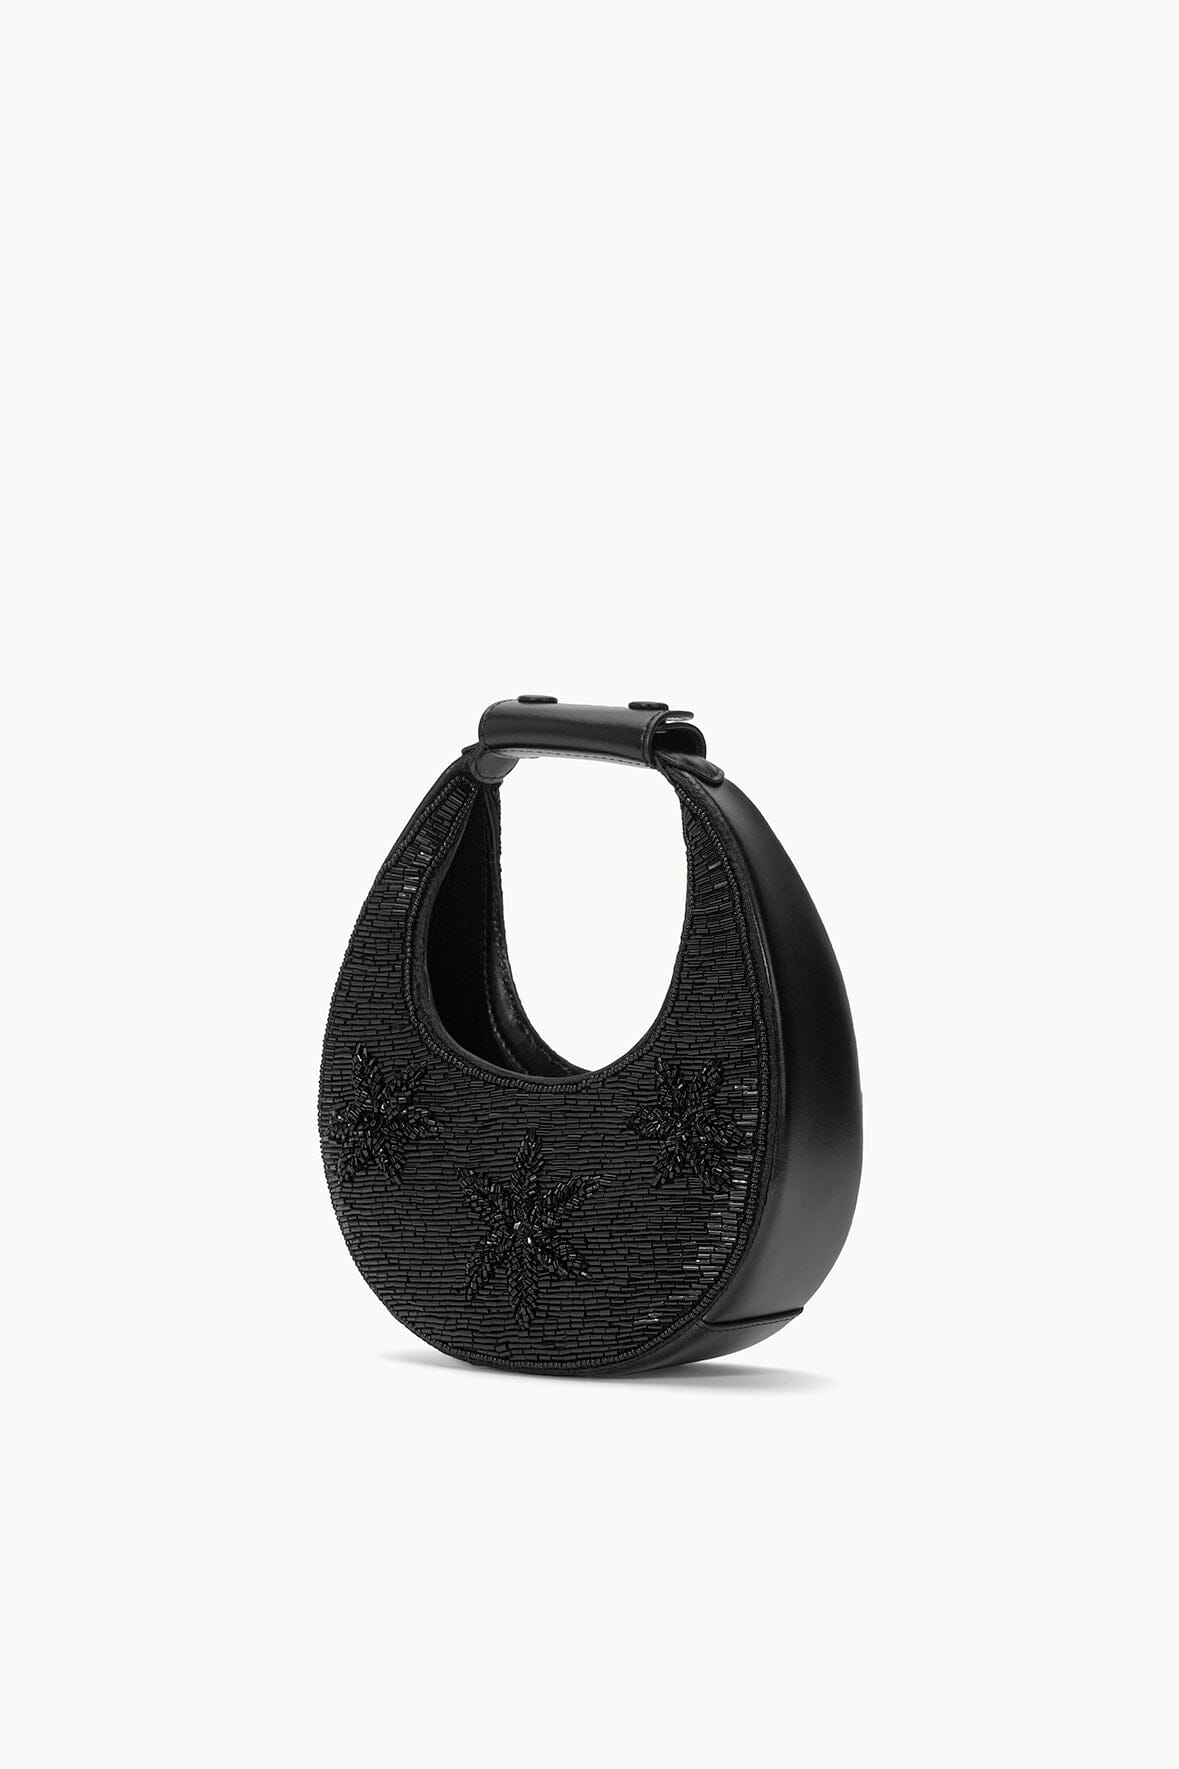 GOODNIGHT MOON BAG IN BLACK STARFISH - Romi Boutique